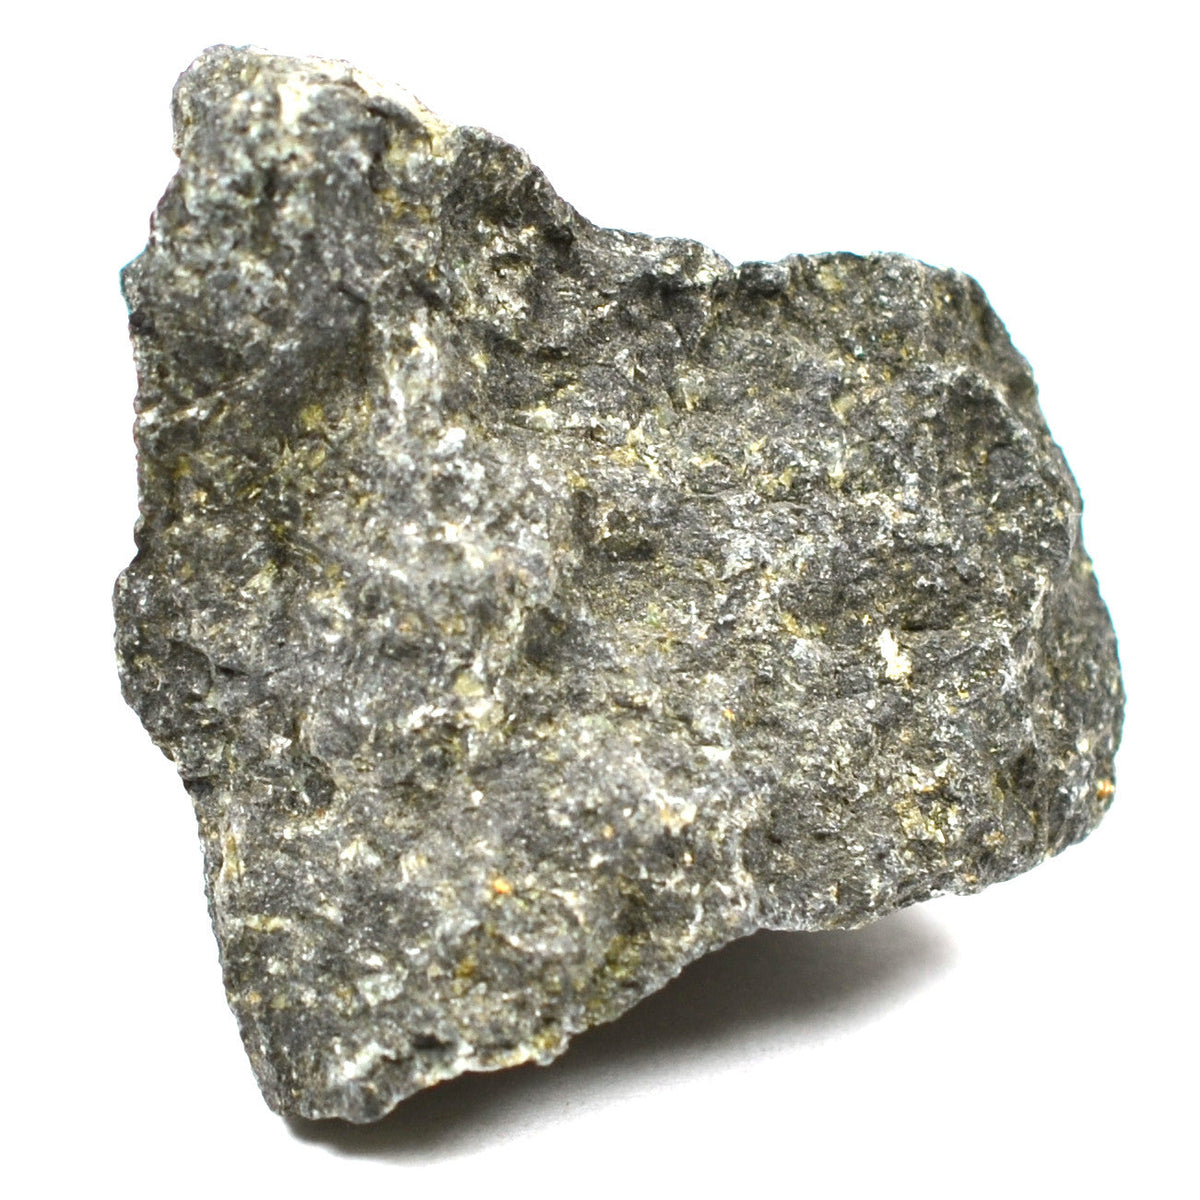 peridotite igneous rock